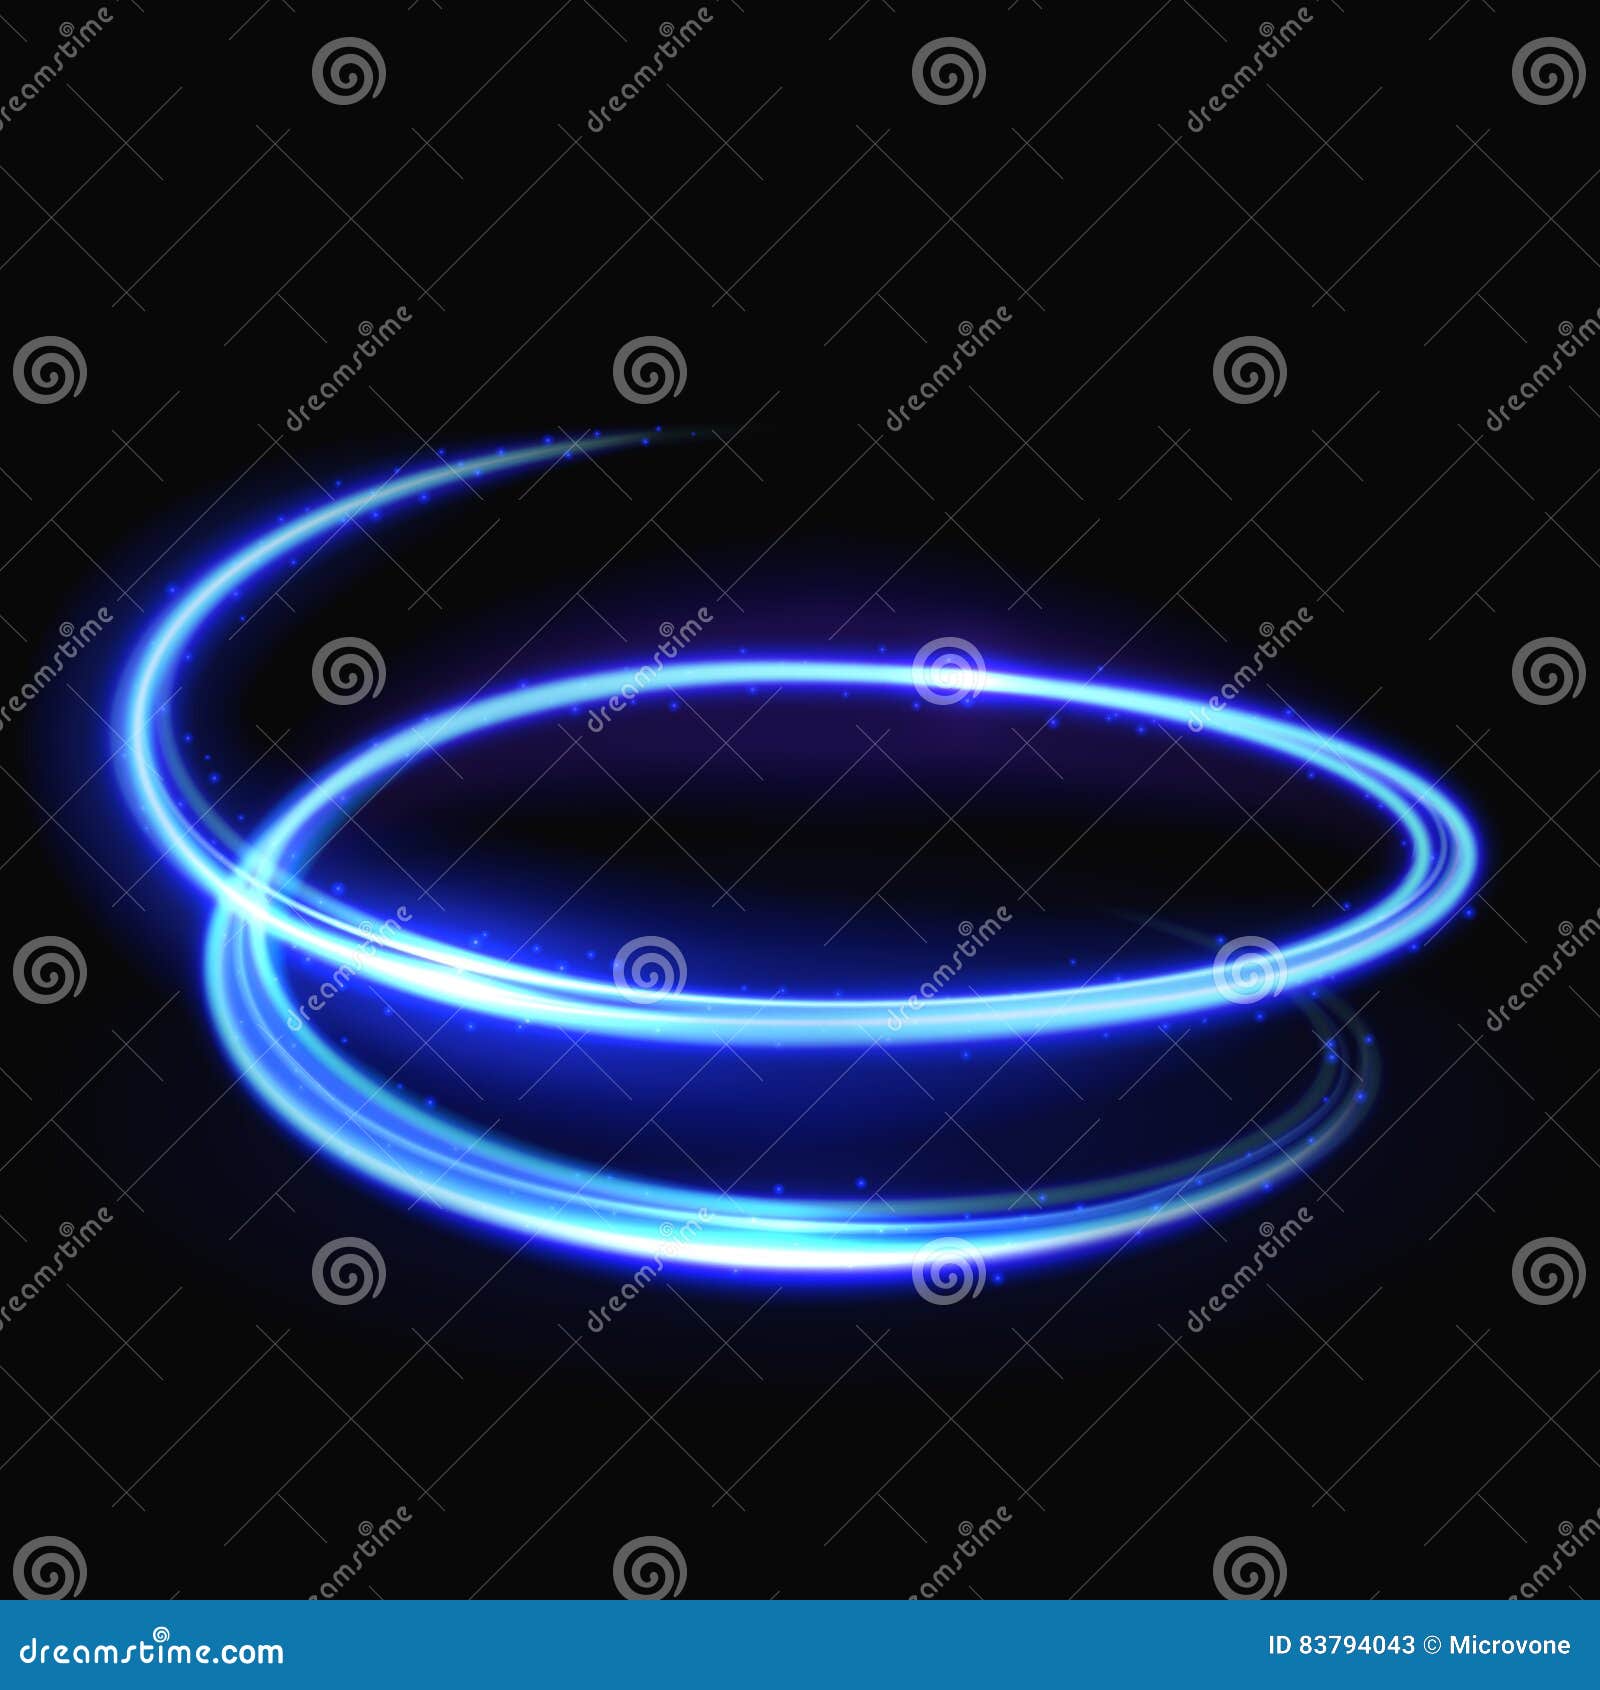 blue  light whirlpool, luminous swirling, glowing spiral background